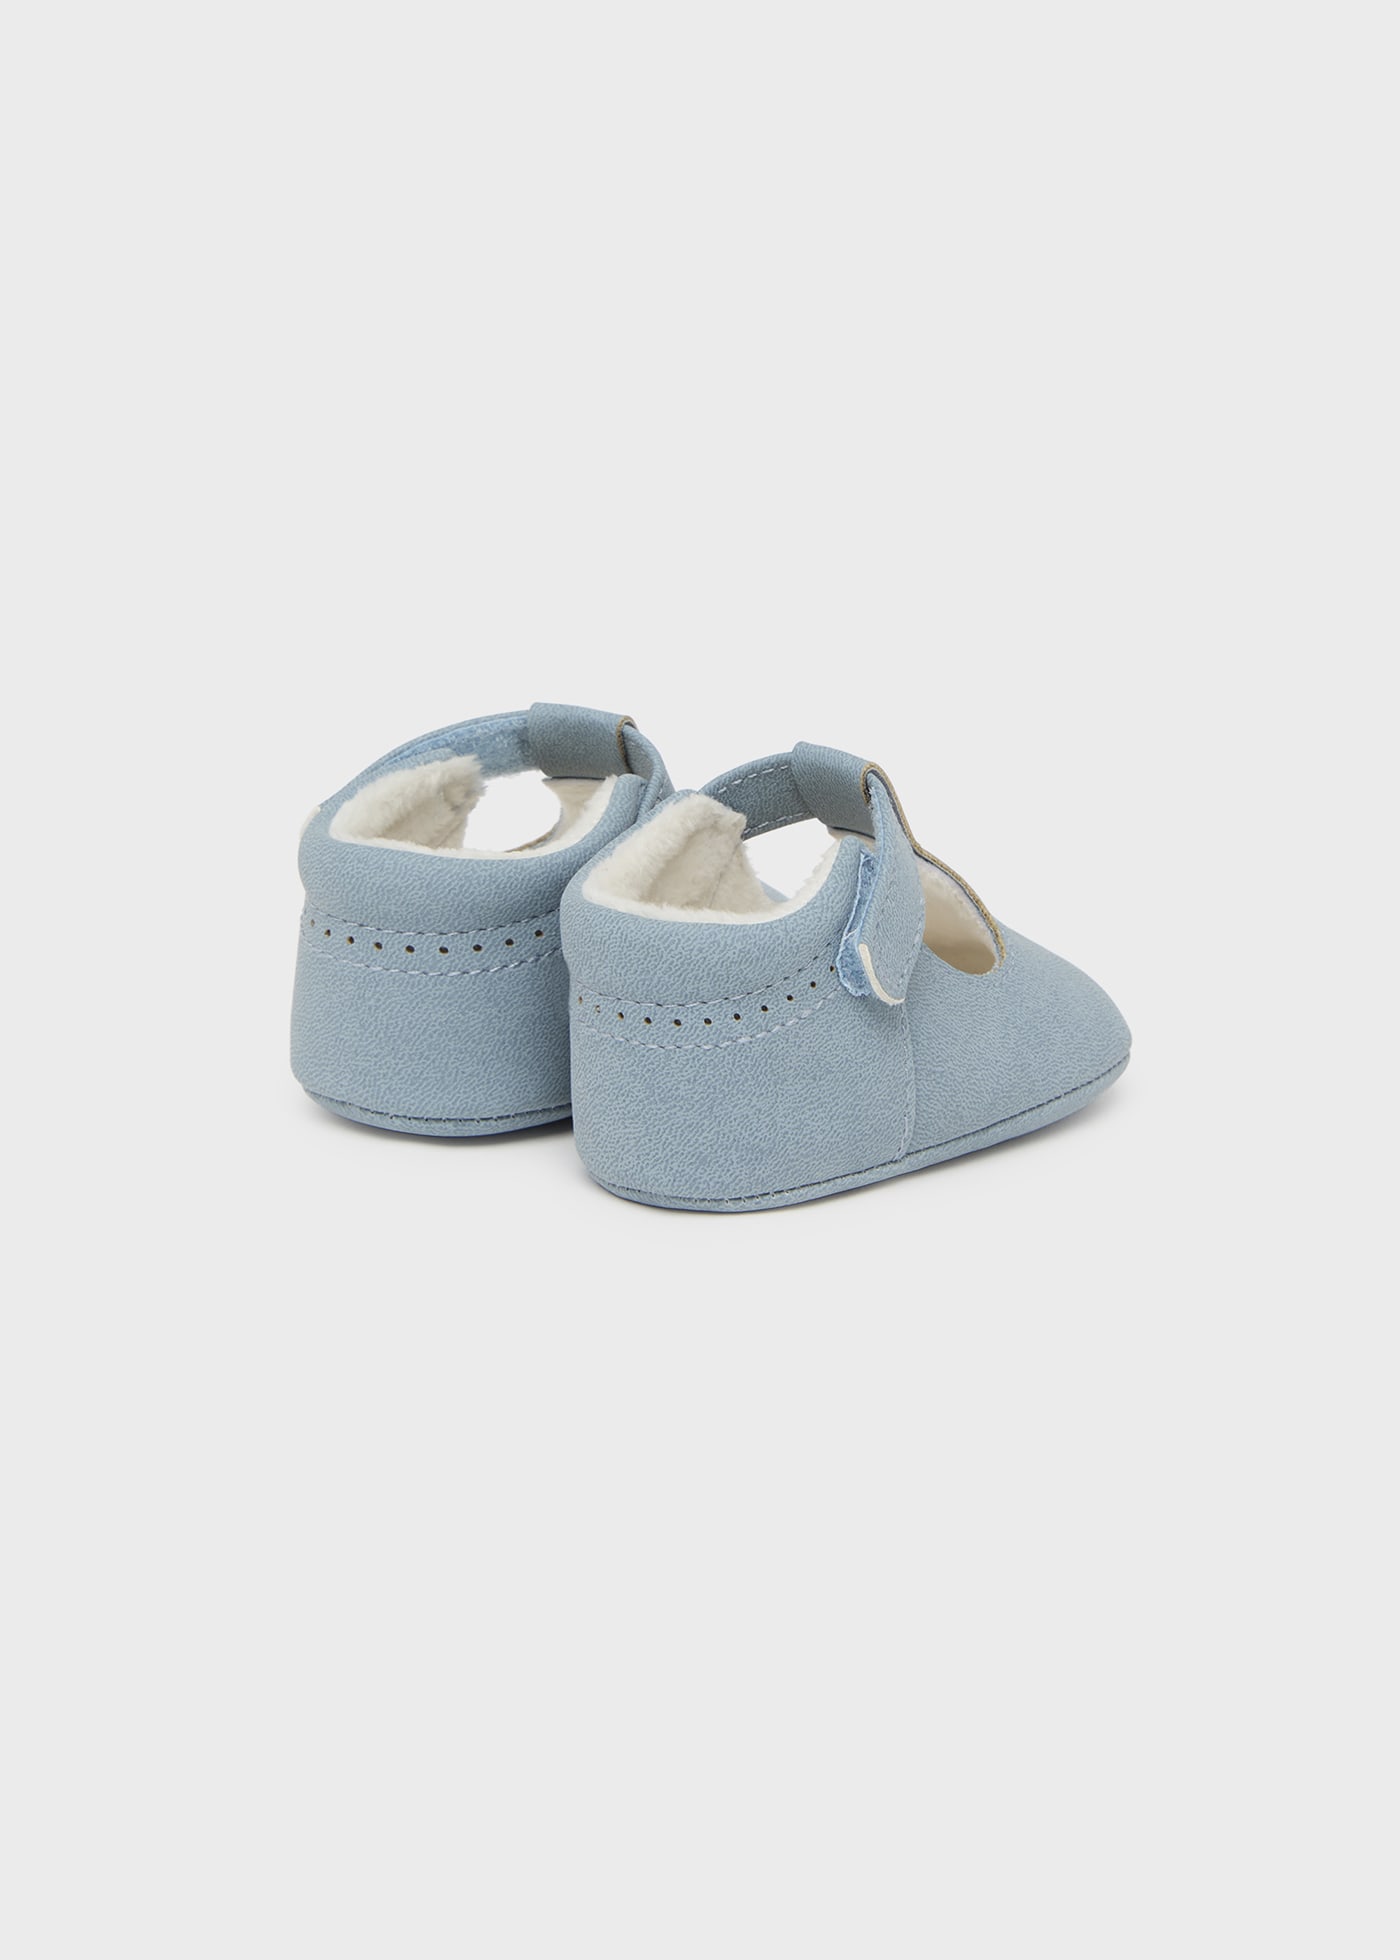 Newborn Mary Jane shoes